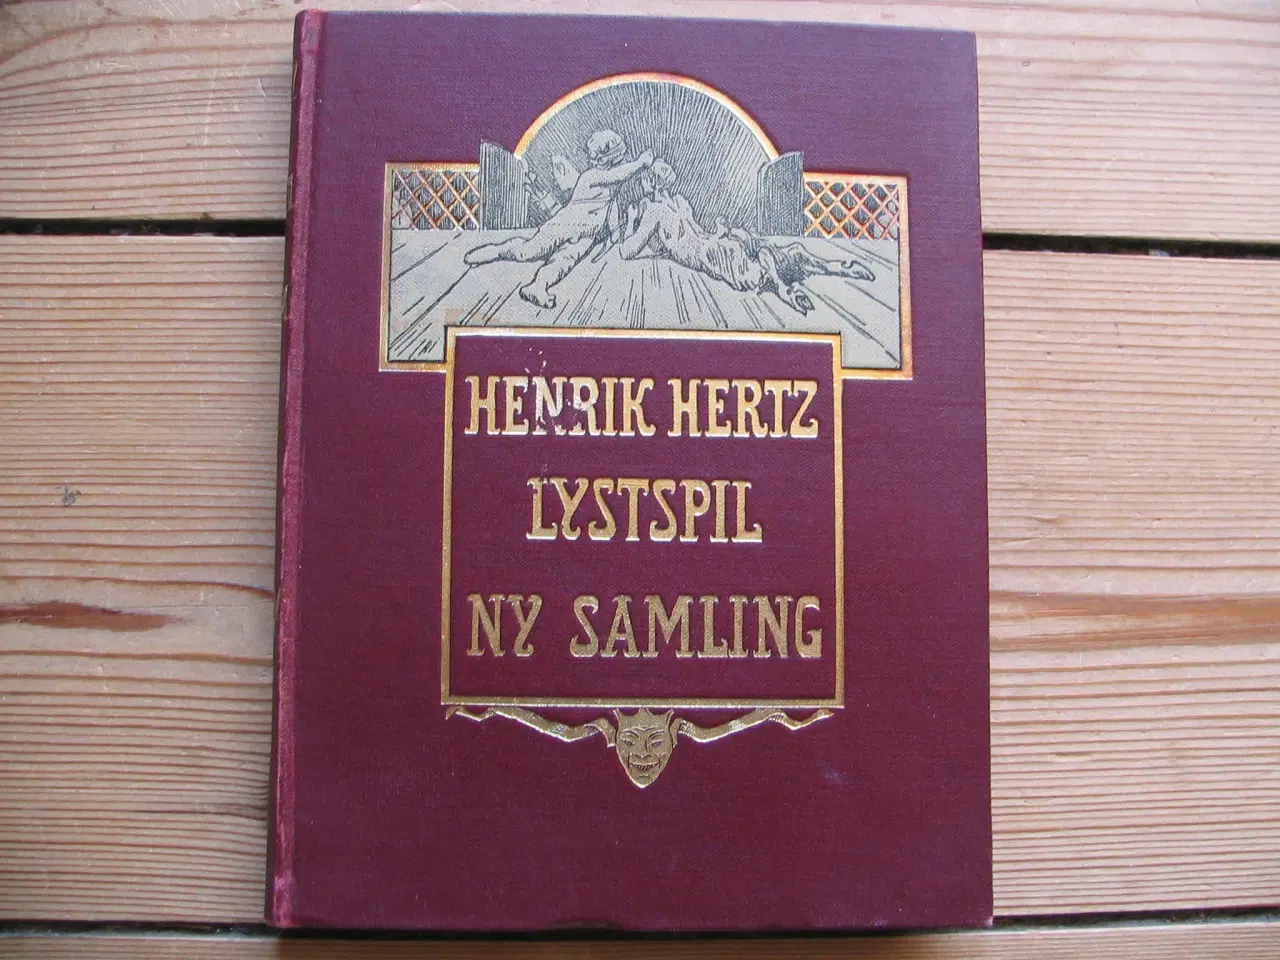 Billede 1 - Henrik Hertz. Lystspil - Ny samling, fra 1902